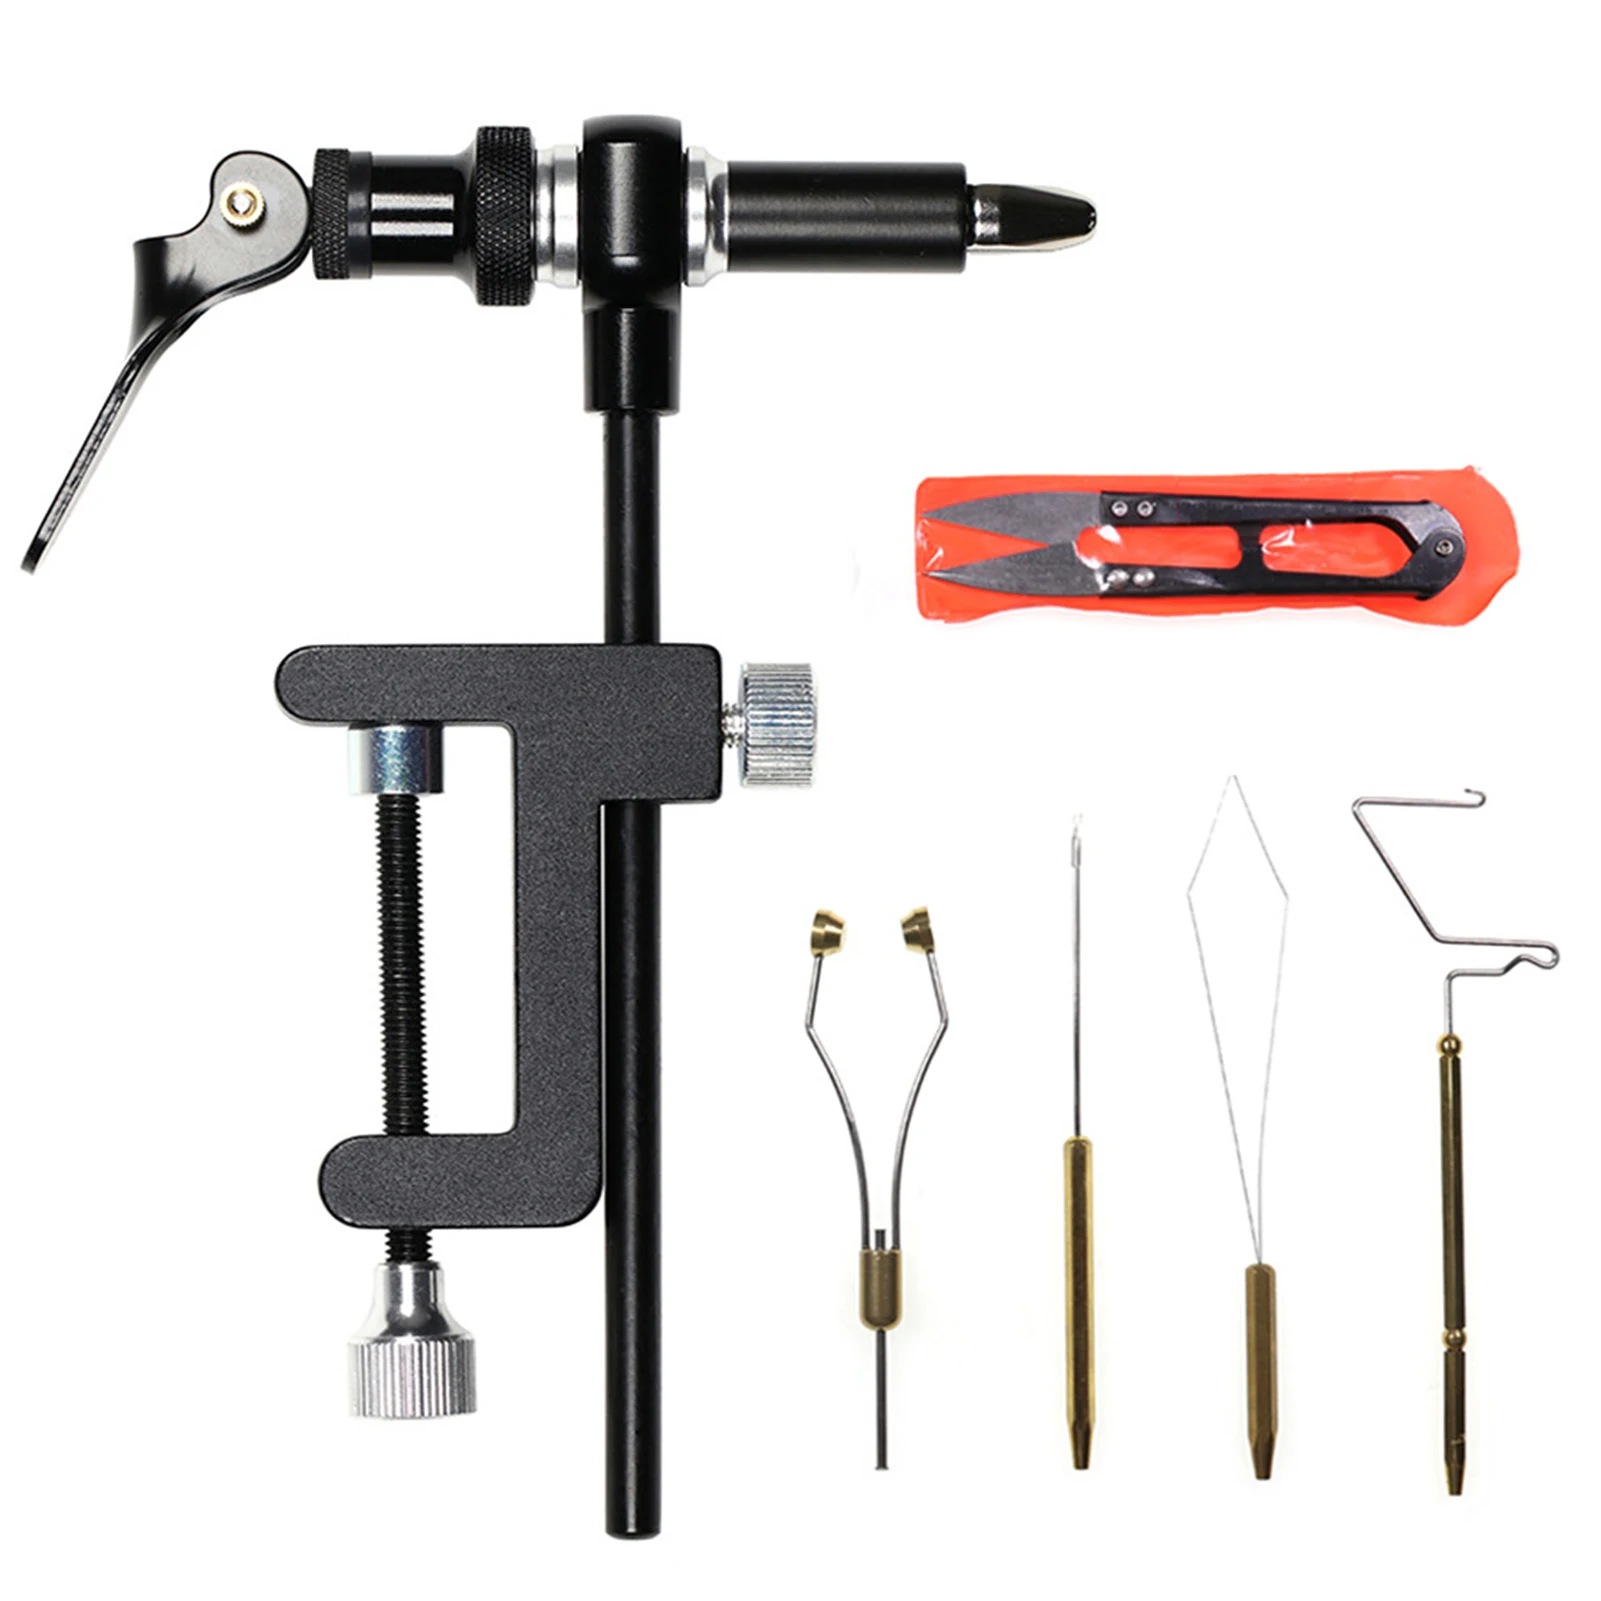 Fishing Fly Tying Tools Combo Kit Fly Tying Vise Bobbin Holder Threader Needle Whip Finisher Scissors Tools